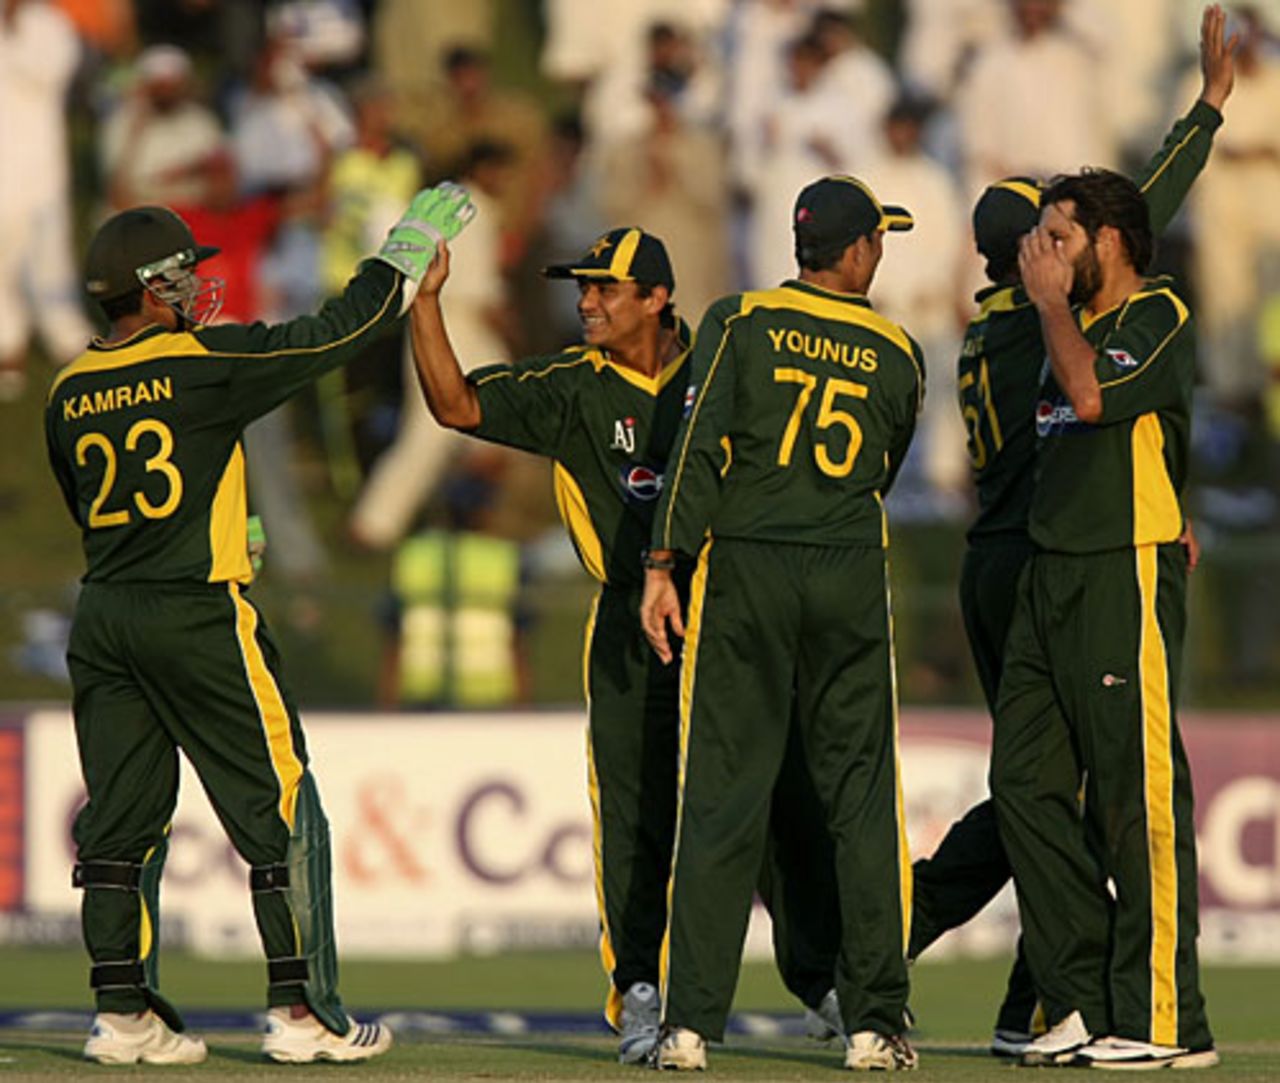 The Pakistan players celebrate another wicket, Pakistan v New Zealand, 3rd ODI, Abu Dhabi, November 9, 2009